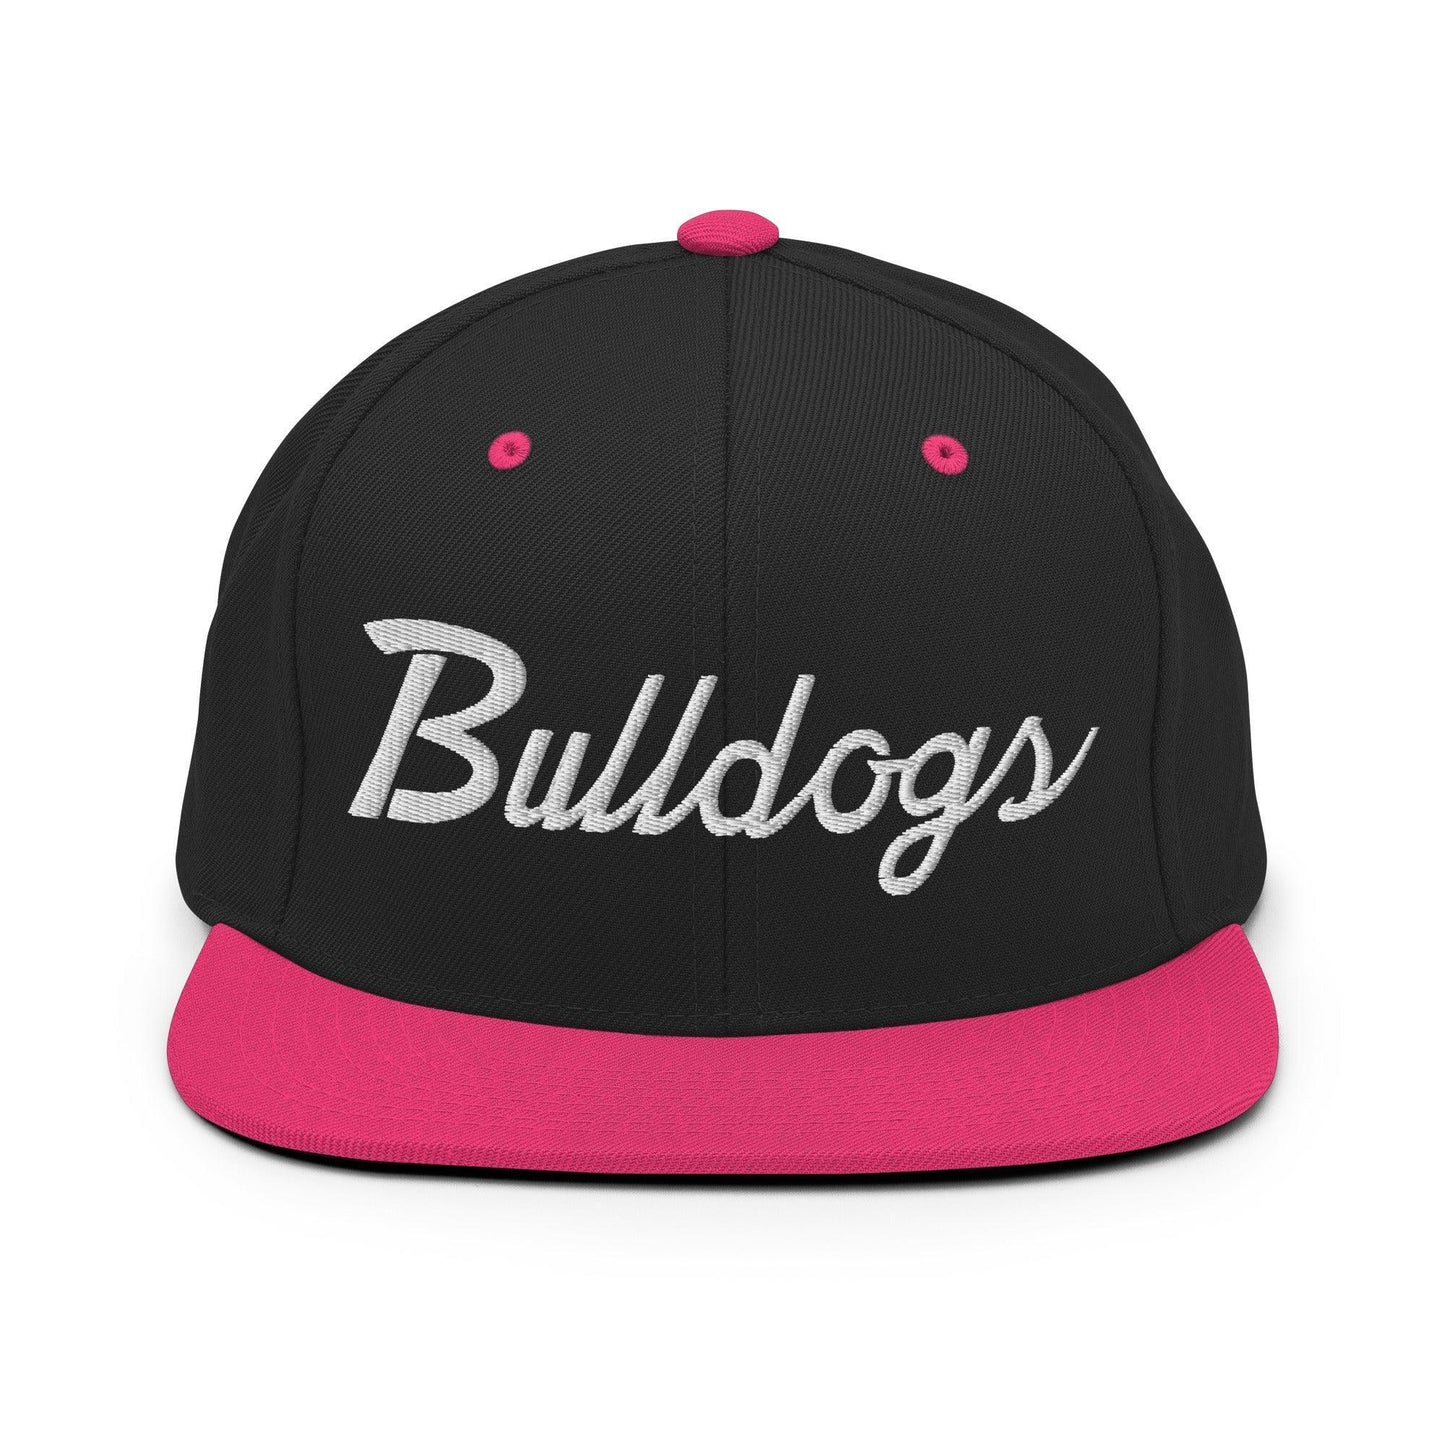 Bulldogs School Mascot Script Snapback Hat Black Neon Pink